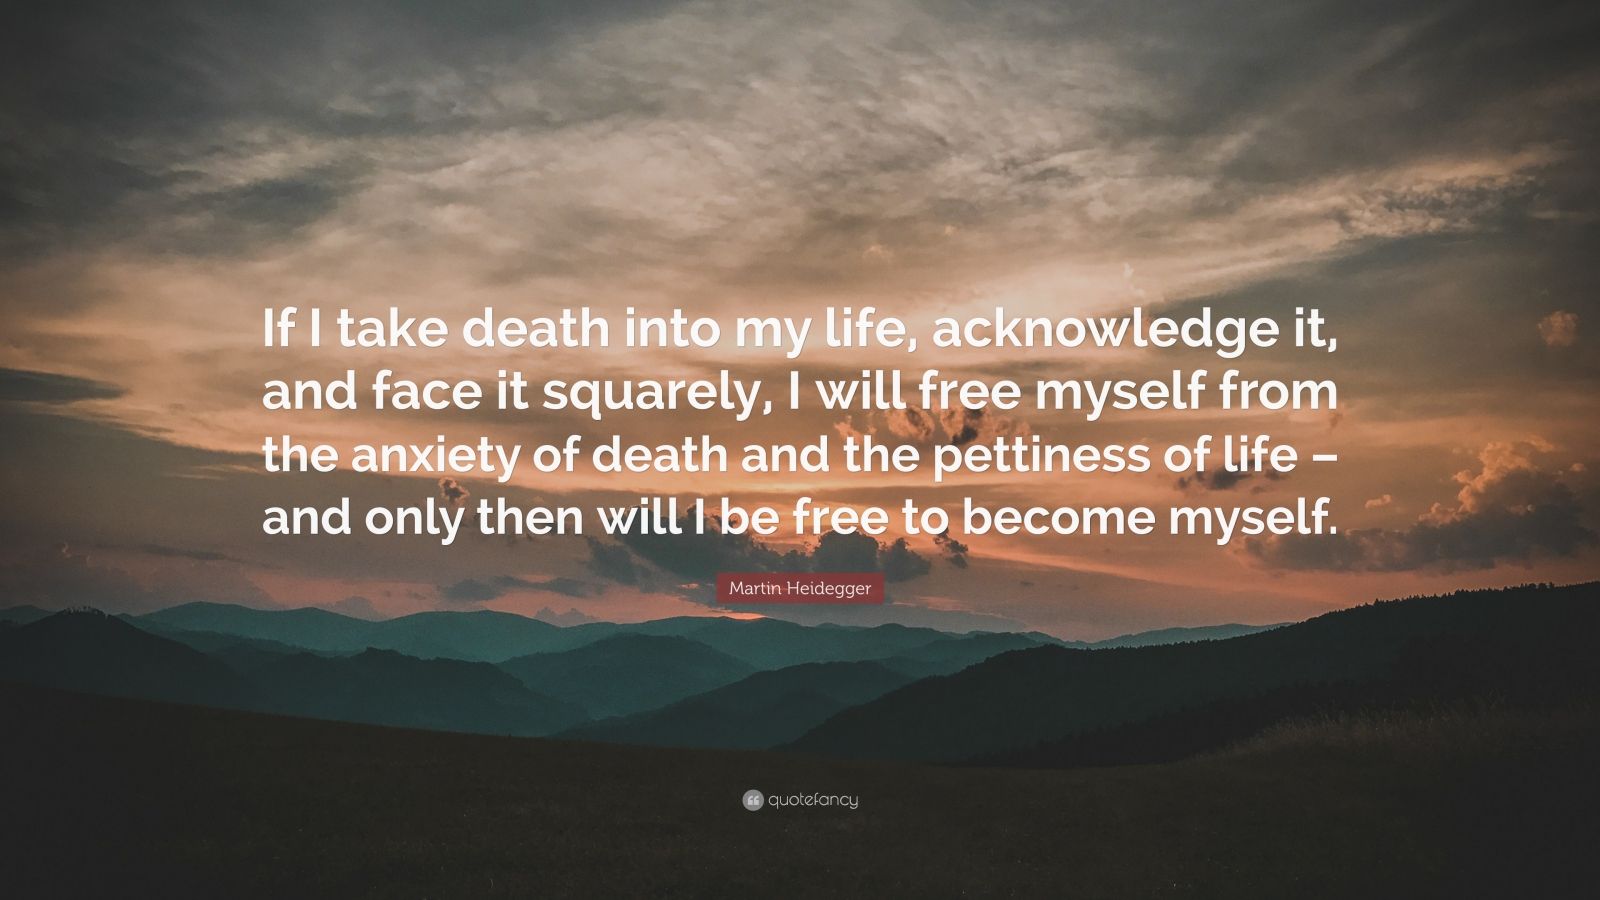 Martin Heidegger Quote: “If I take death into my life, acknowledge it ...